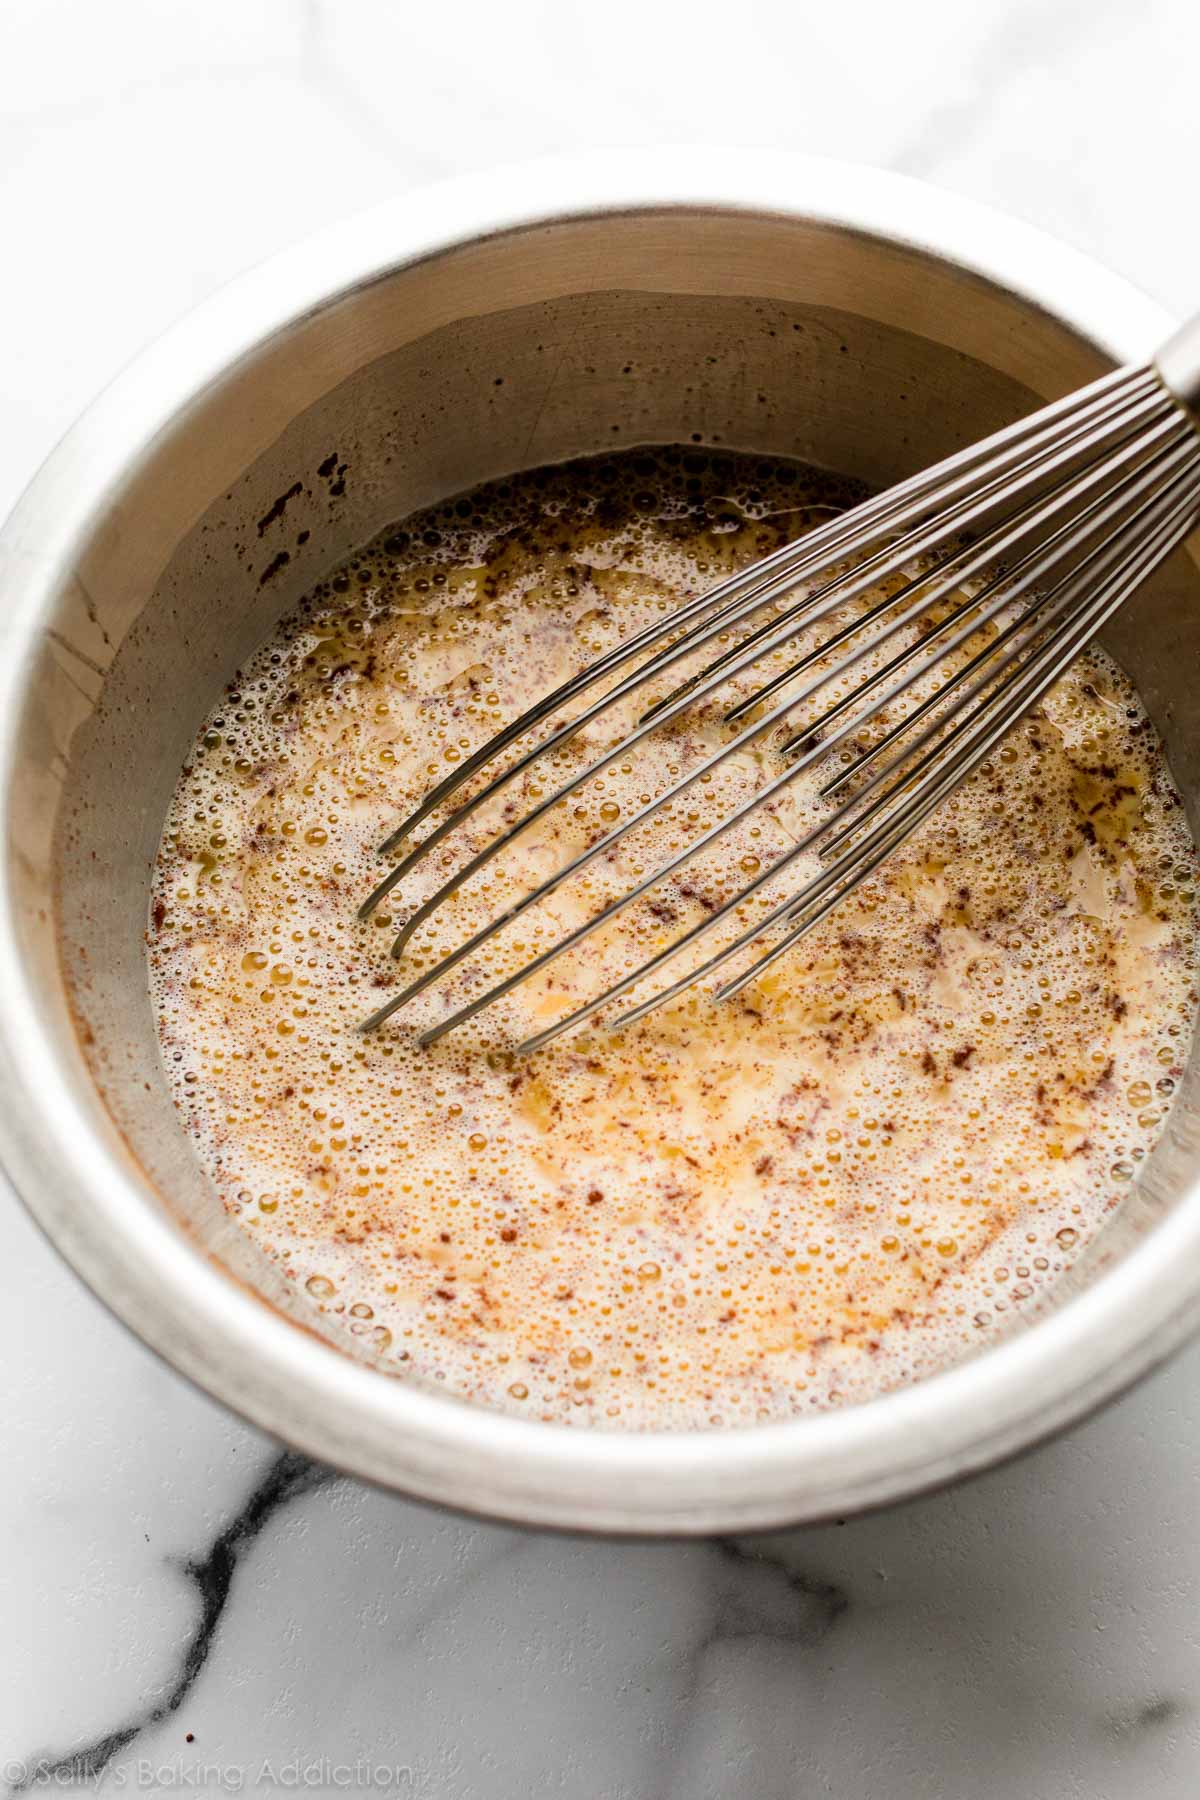 brown sugar cinnamon և egg cream mixture by mixing in a bowl